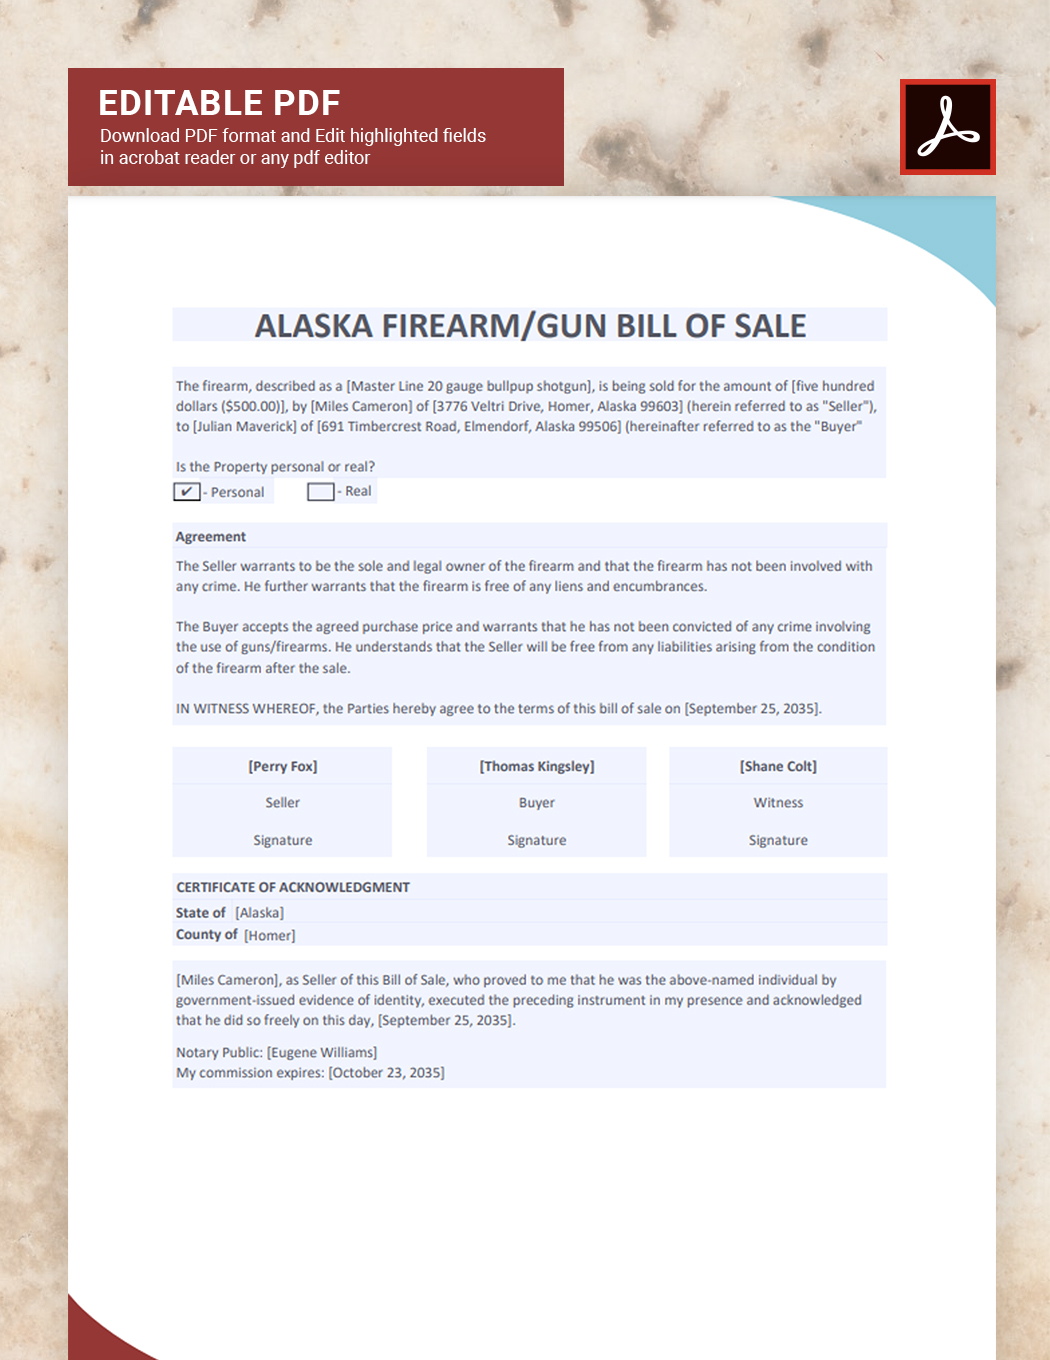 Alaska Firearm/Gun Bill of Sale Template